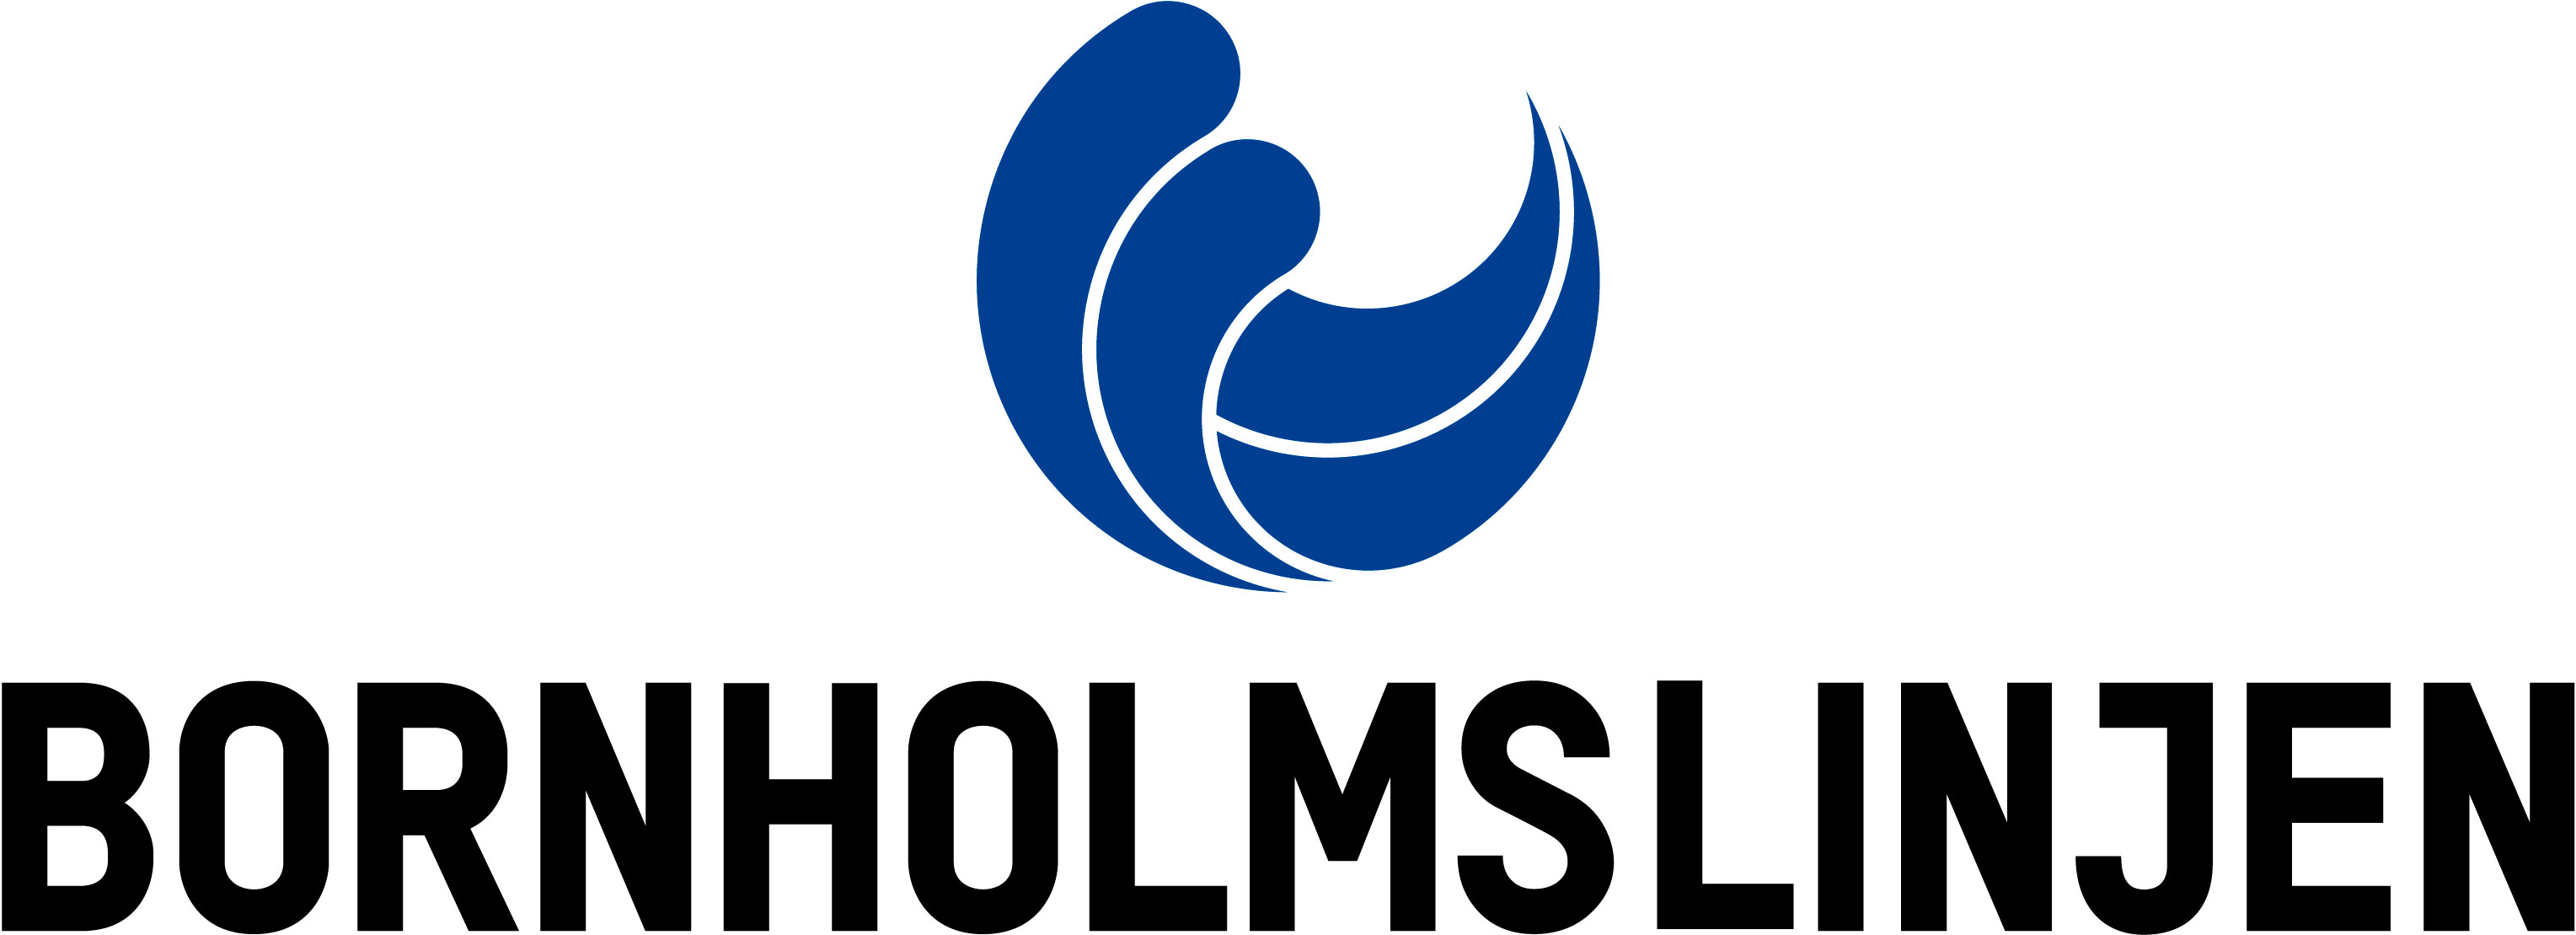 Bornholmslinjens logo